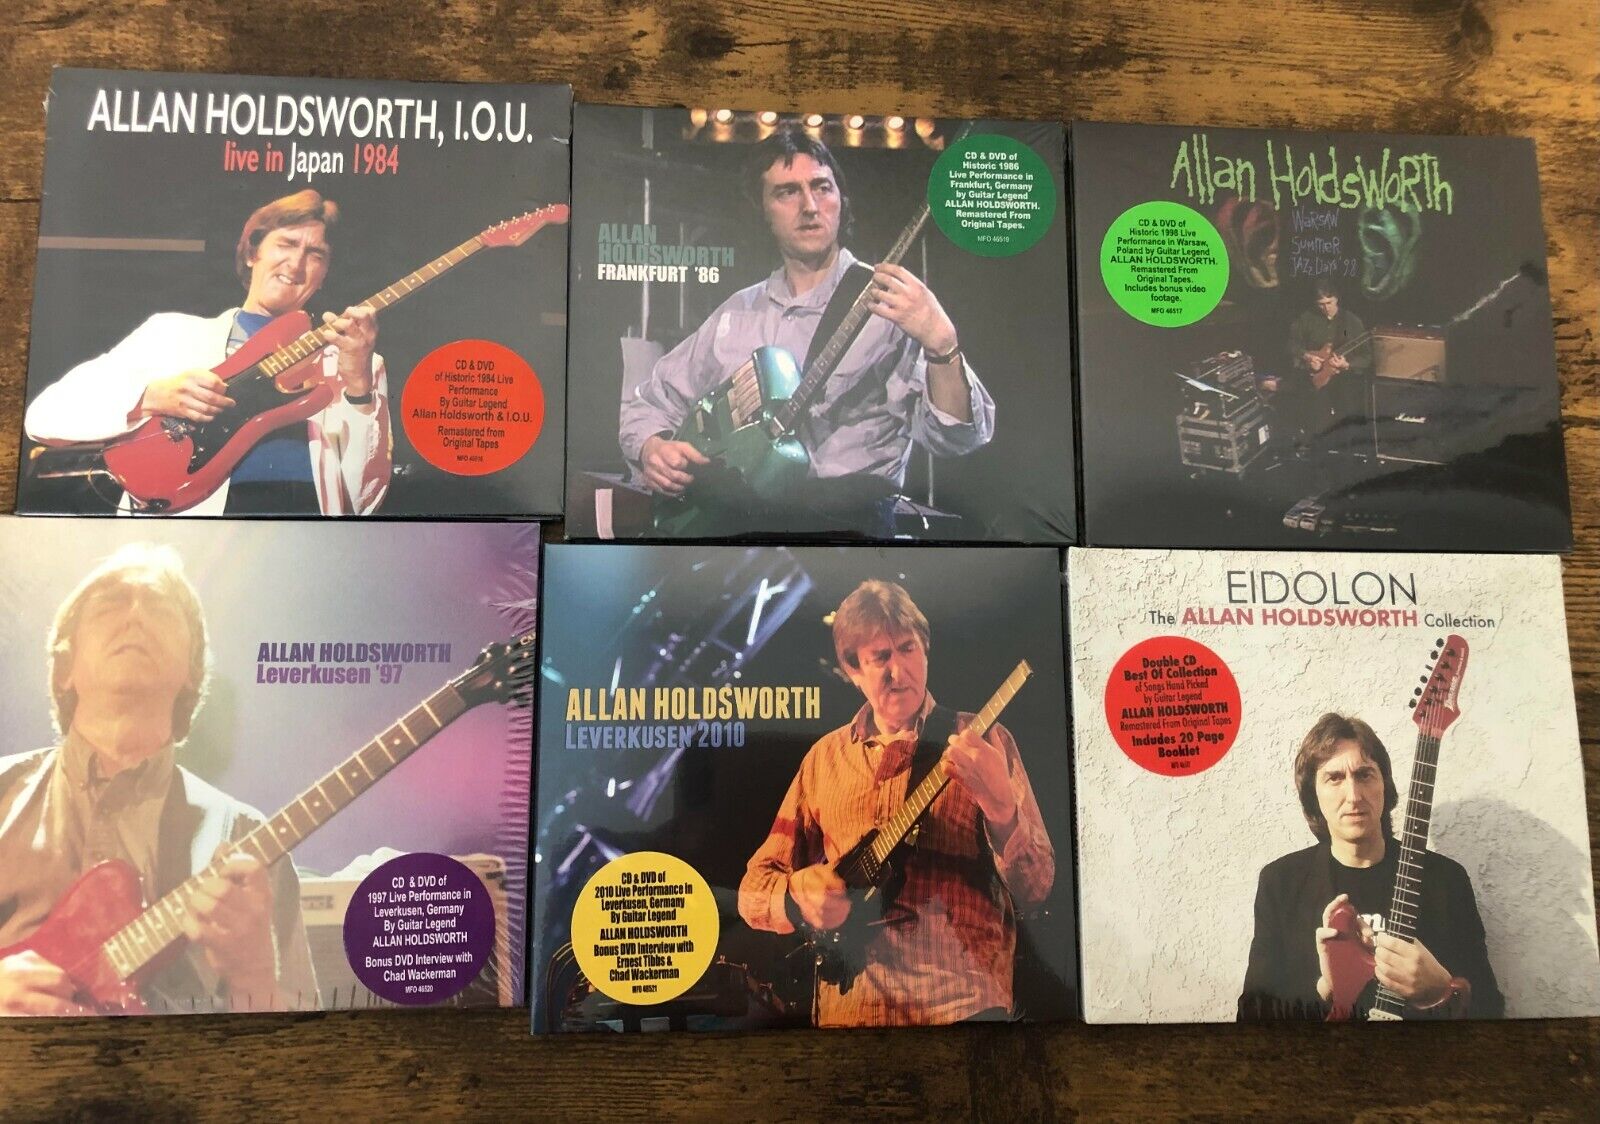 Allan Holdsworth - Live CD/DVD Bundle and Eidolon: Best of Allan Holdsworth